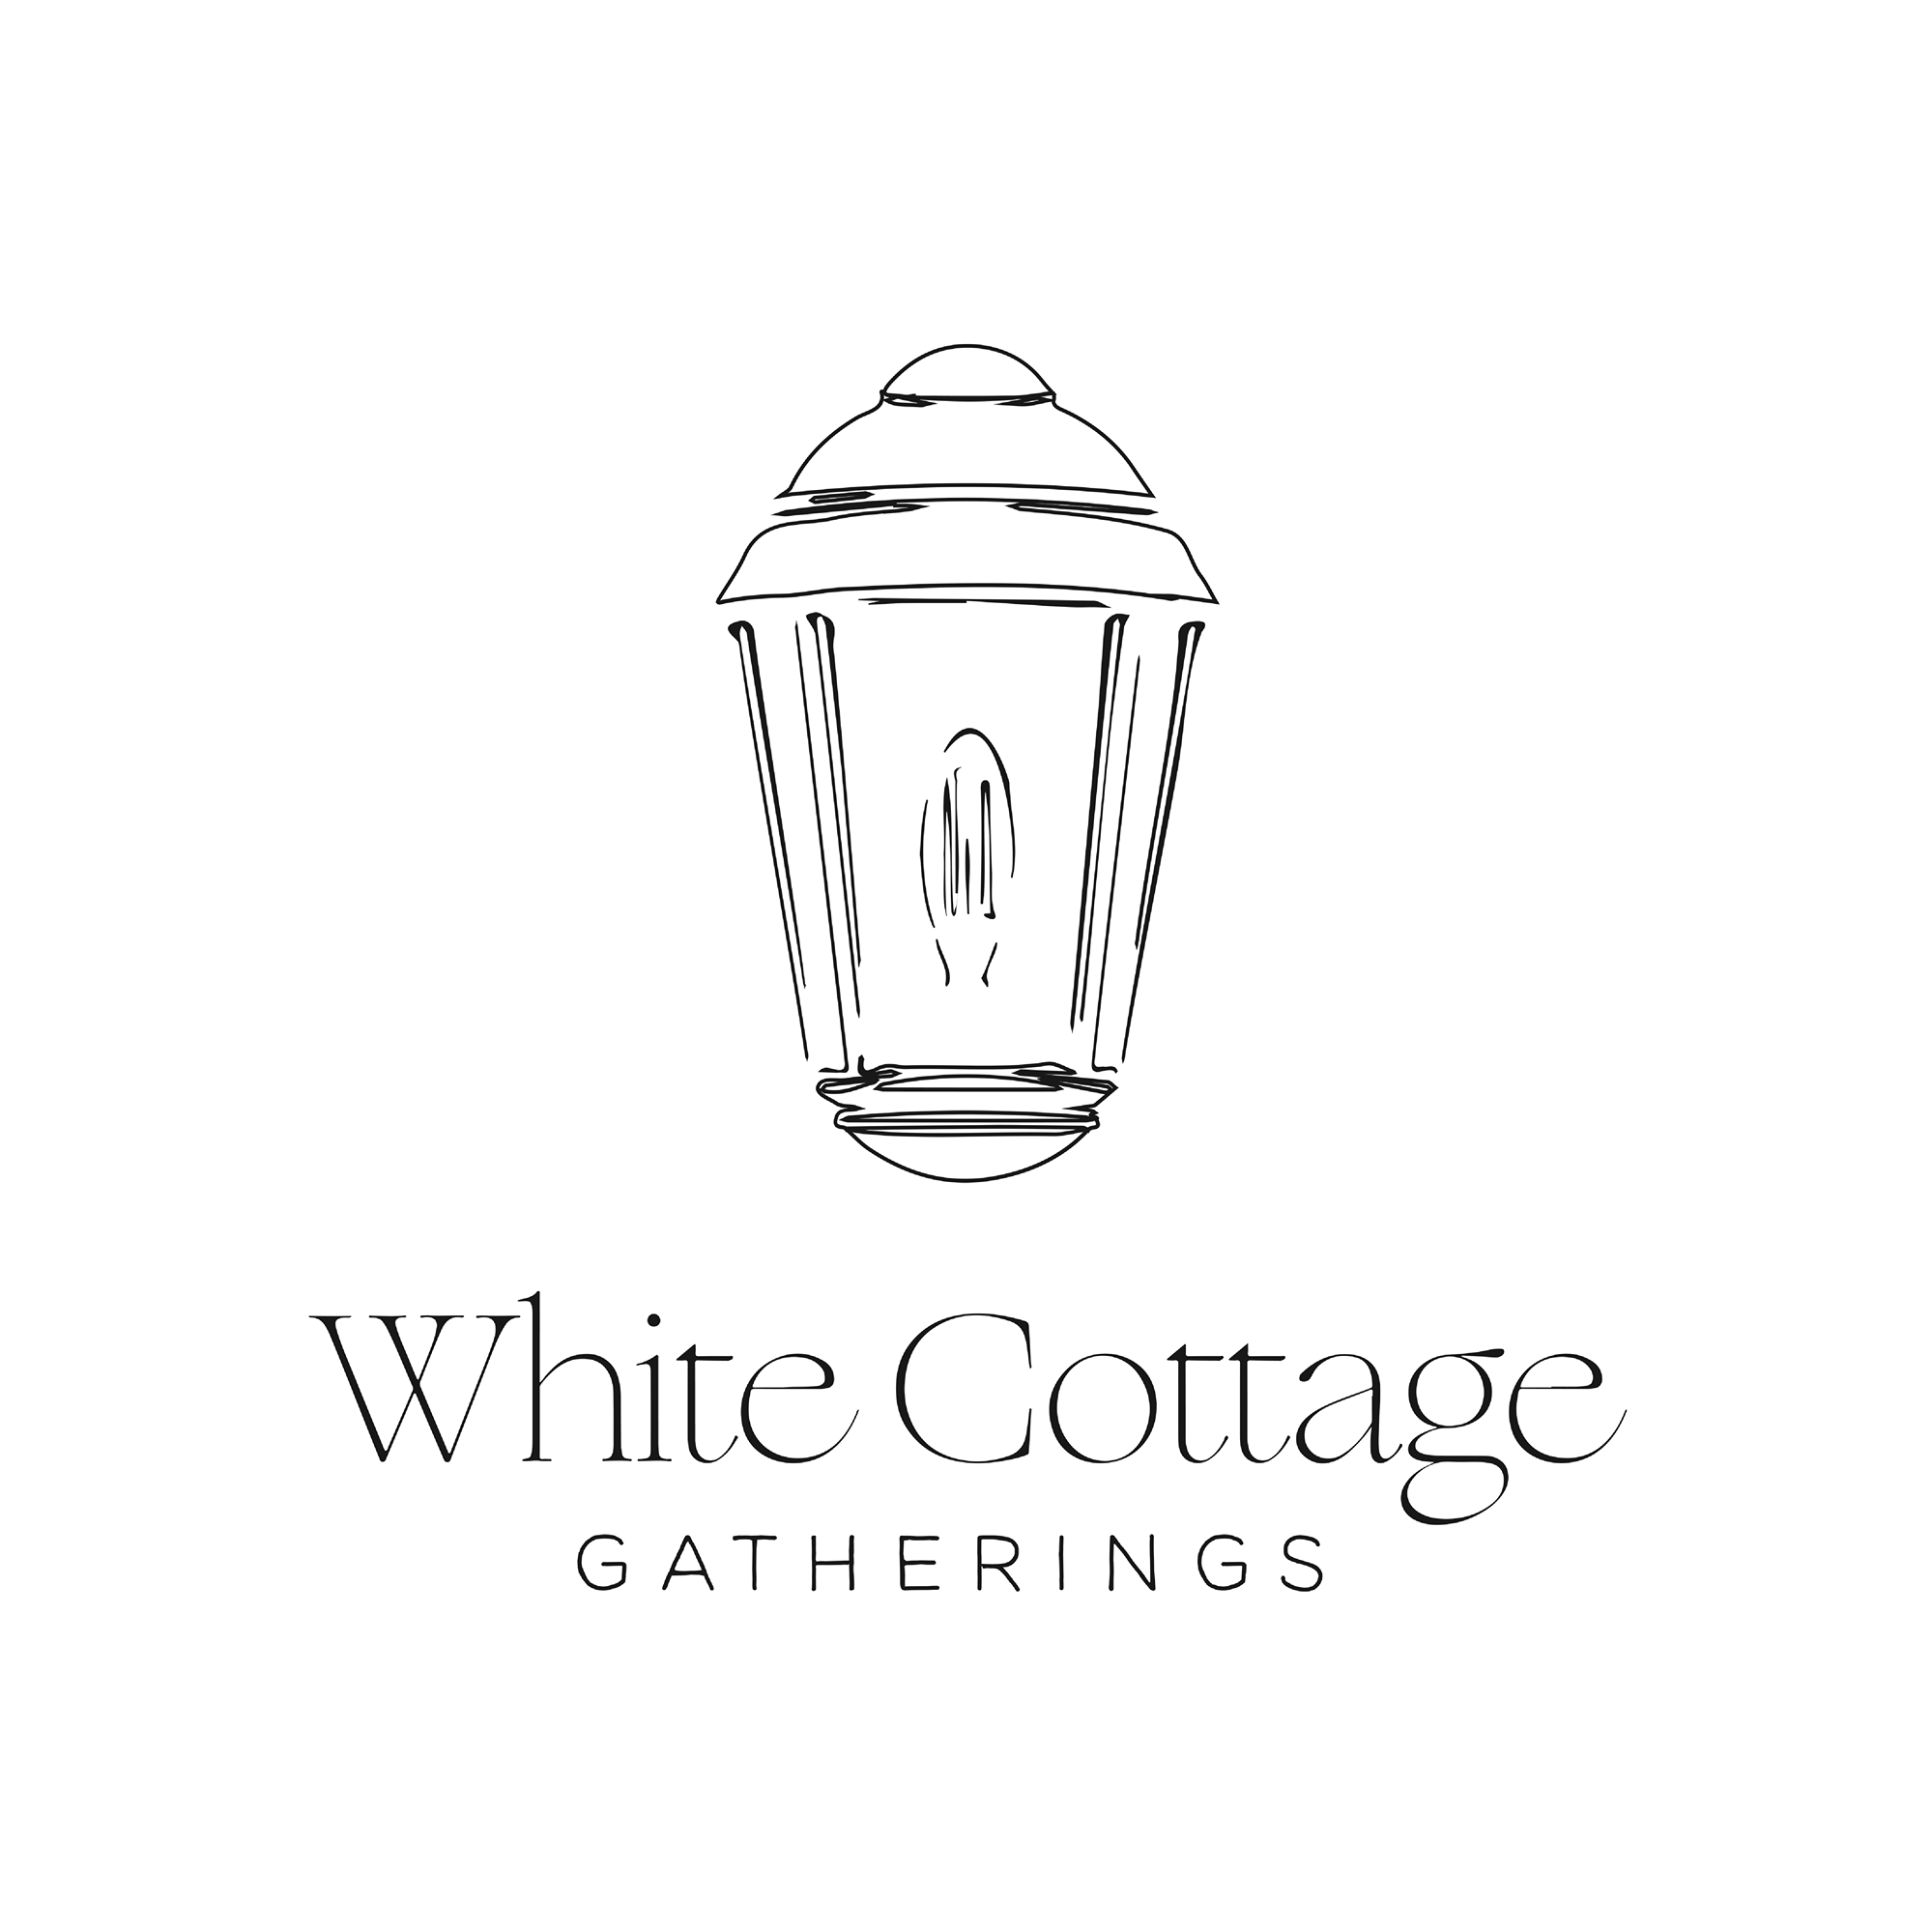 White Cottage Gatherings